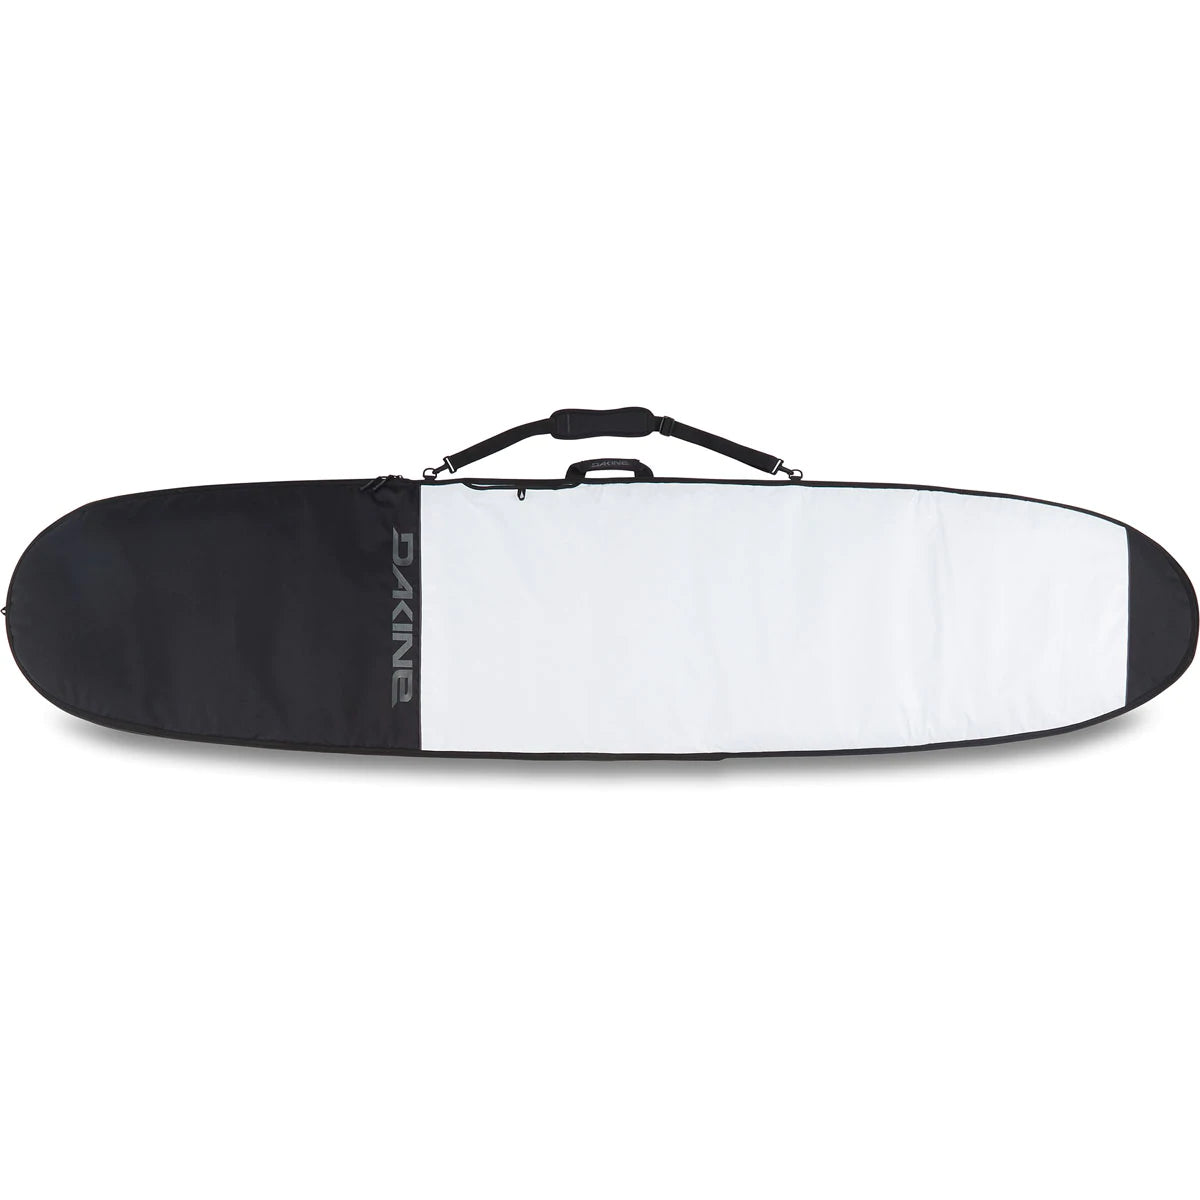 7'6" Dakine Daylight Surfboard Bag - Noserider - Urban Surf